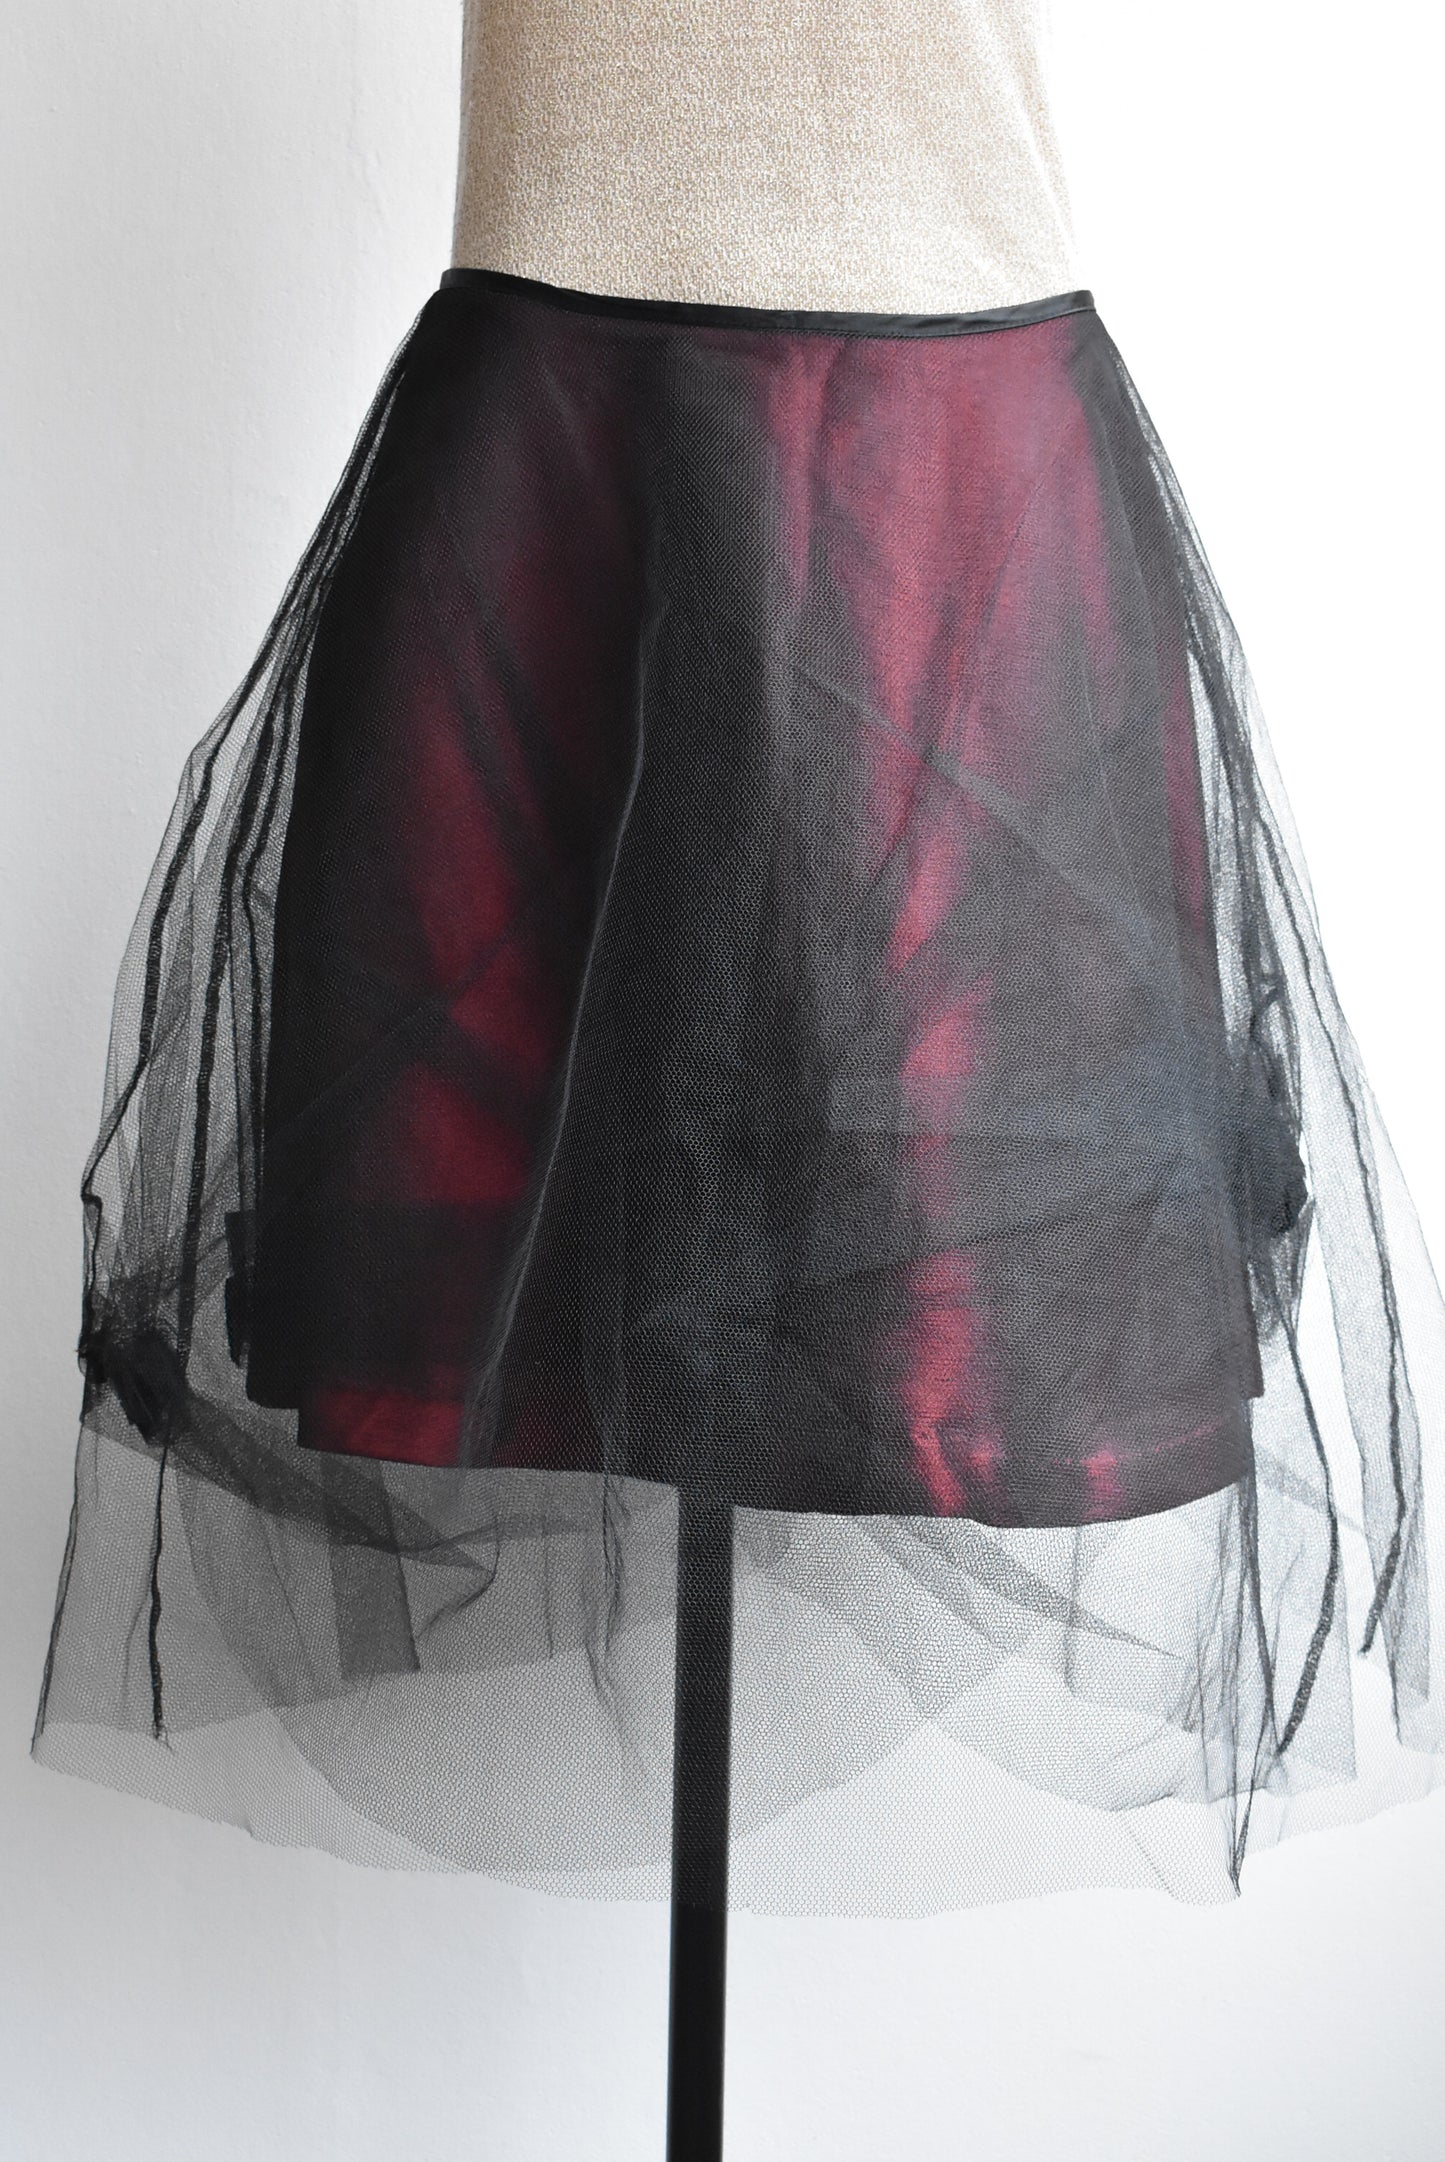 Principal Designs NZ made tulle skirt, M